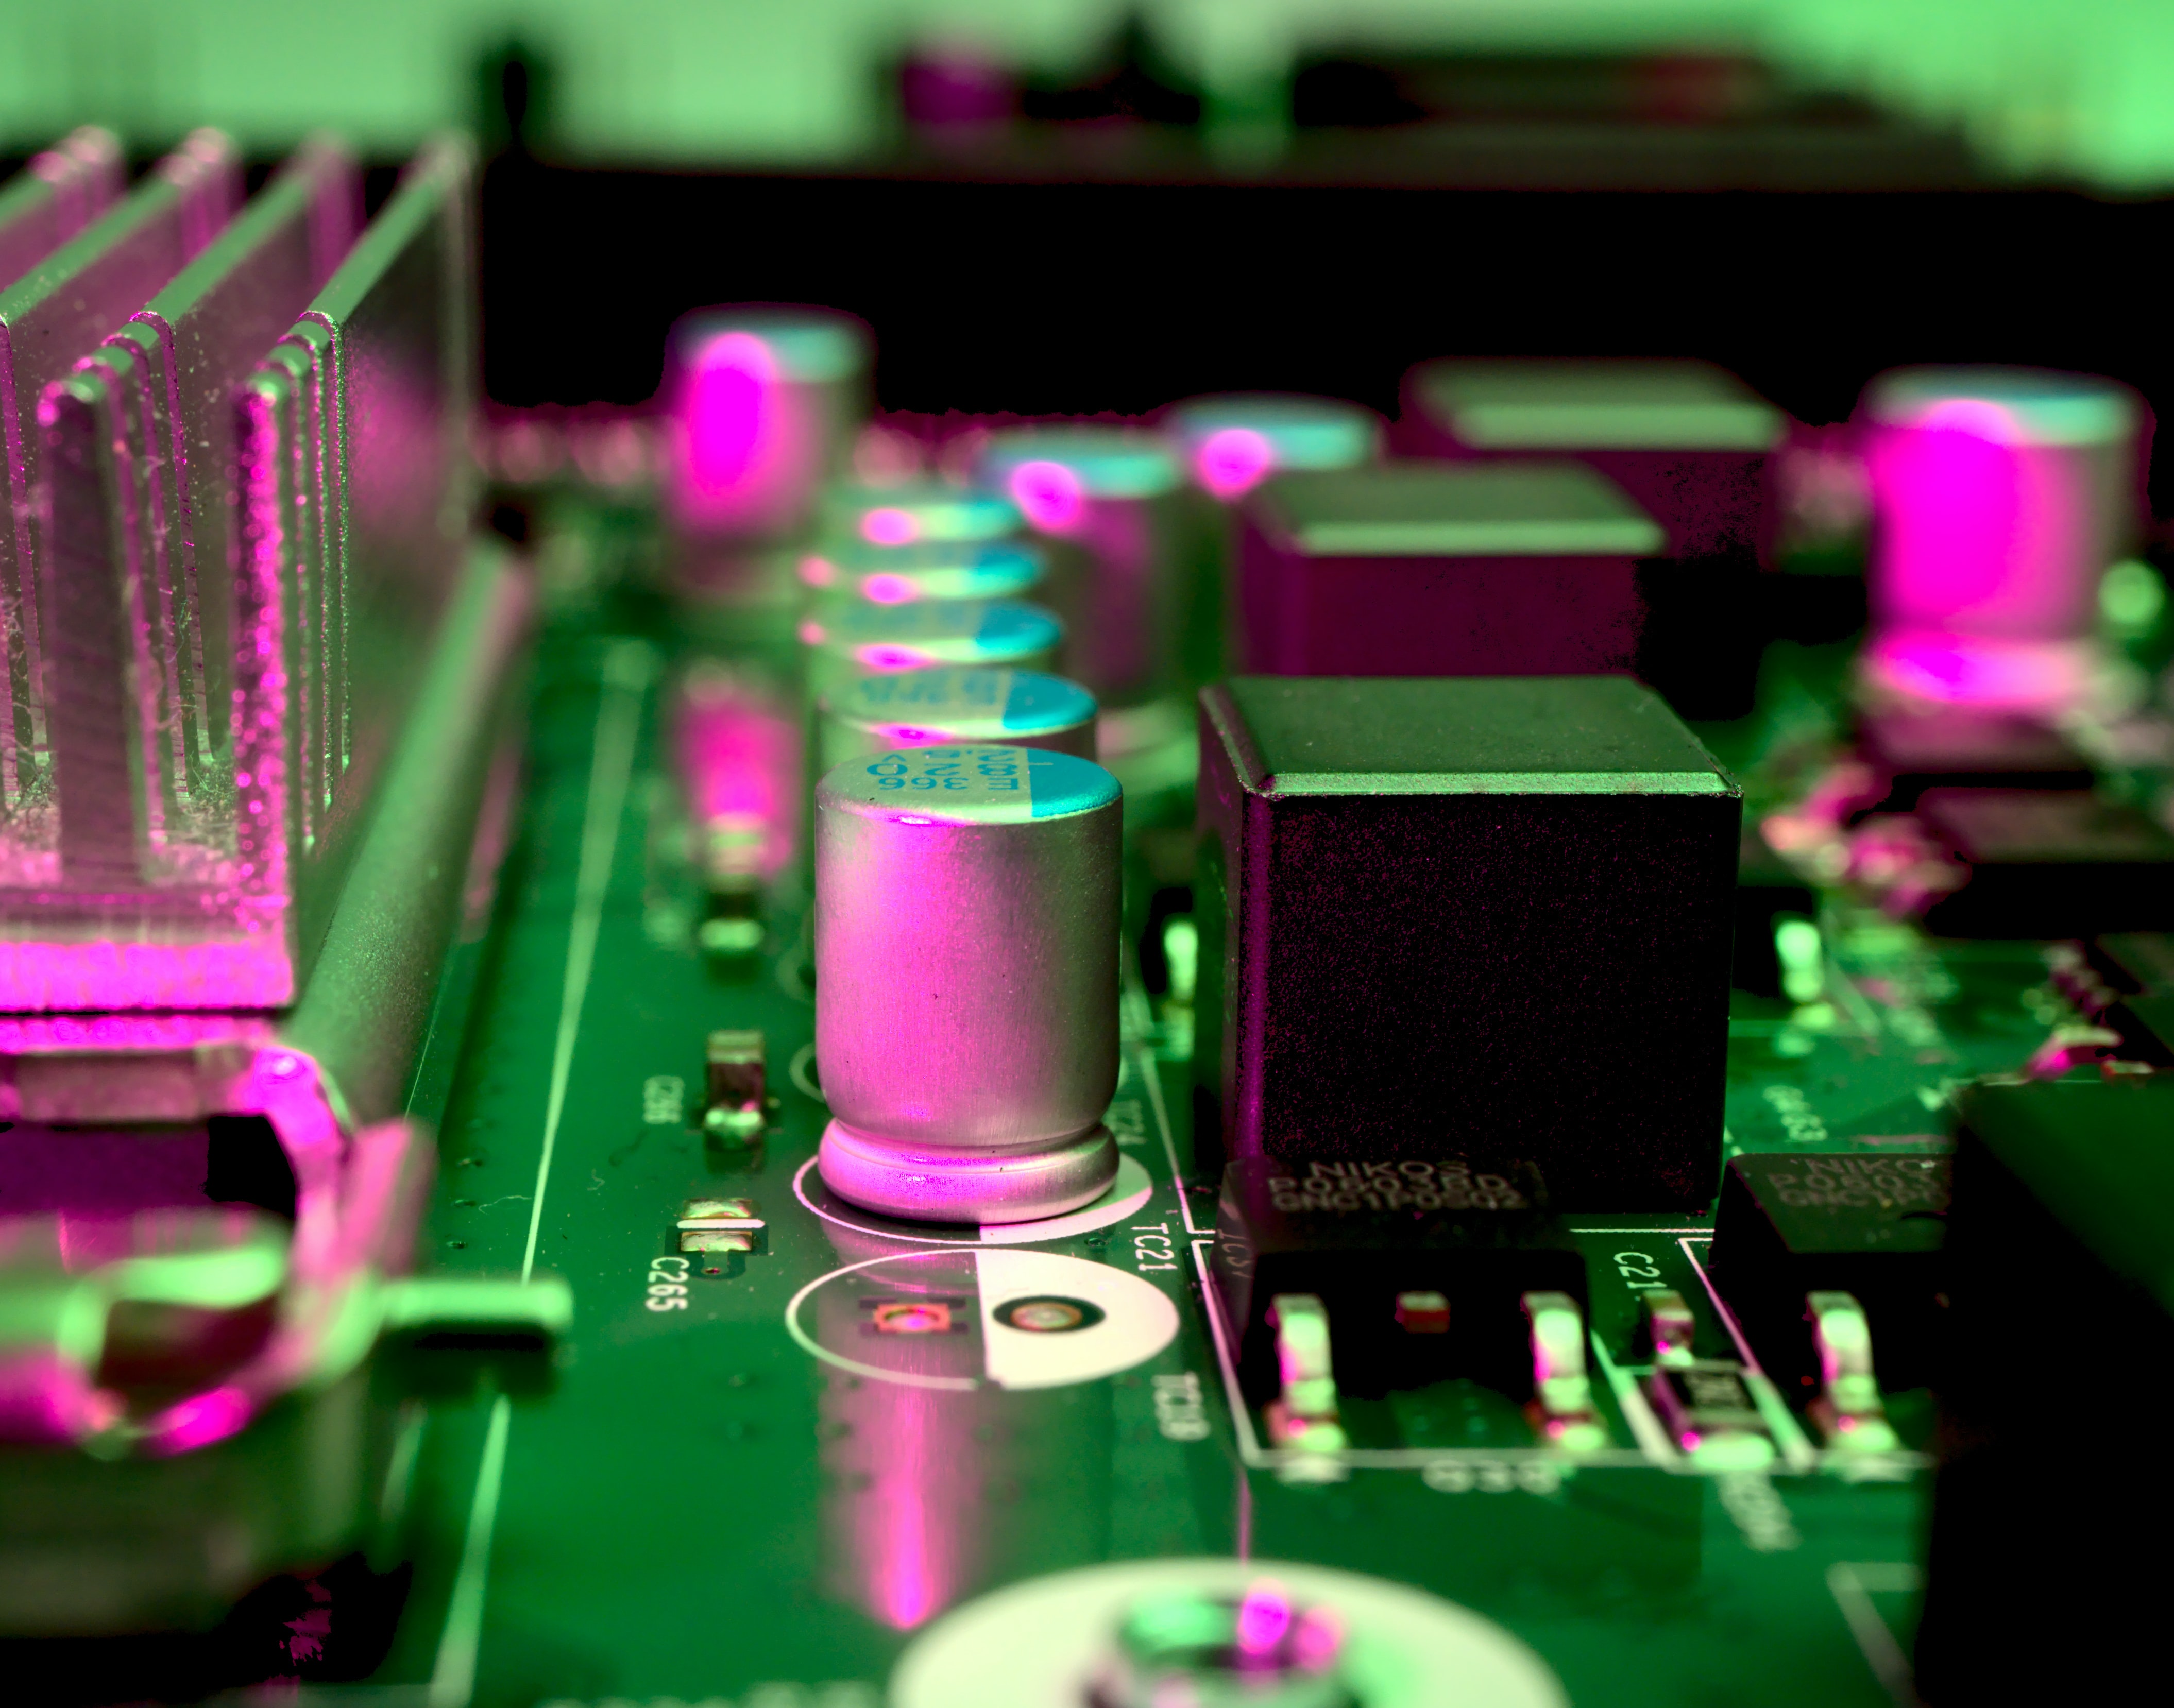 Closeup photo of a circuit board